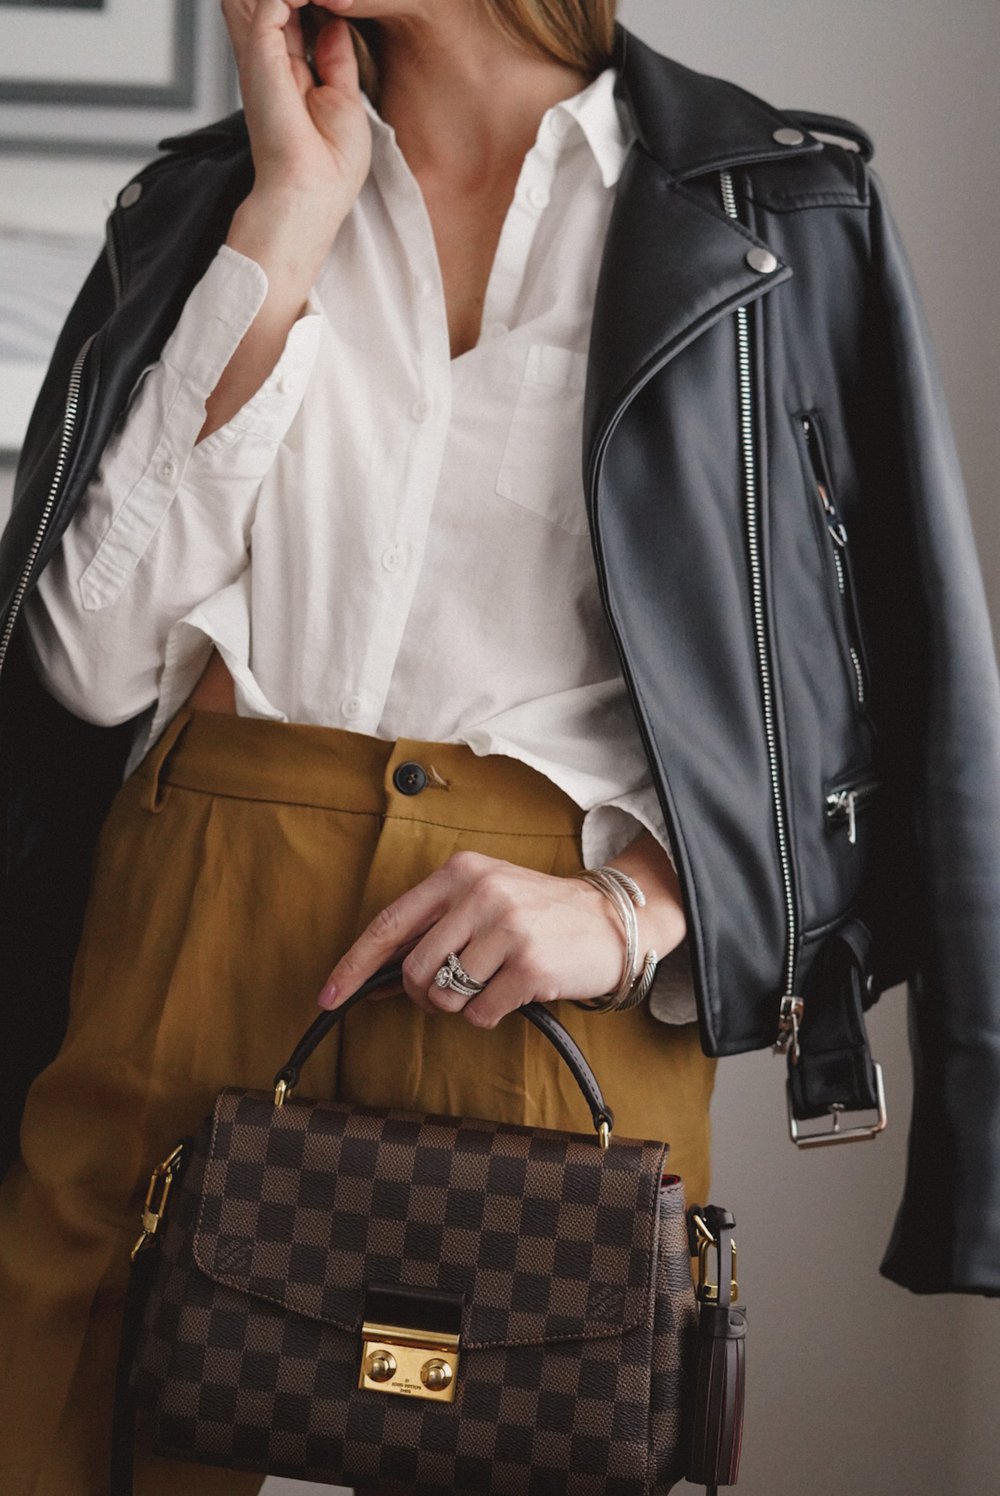  Jessica Ashley wearing white linen blouse, Zara leather jacket, Zara Pants with Louis Vuitton handbag | outfit details 